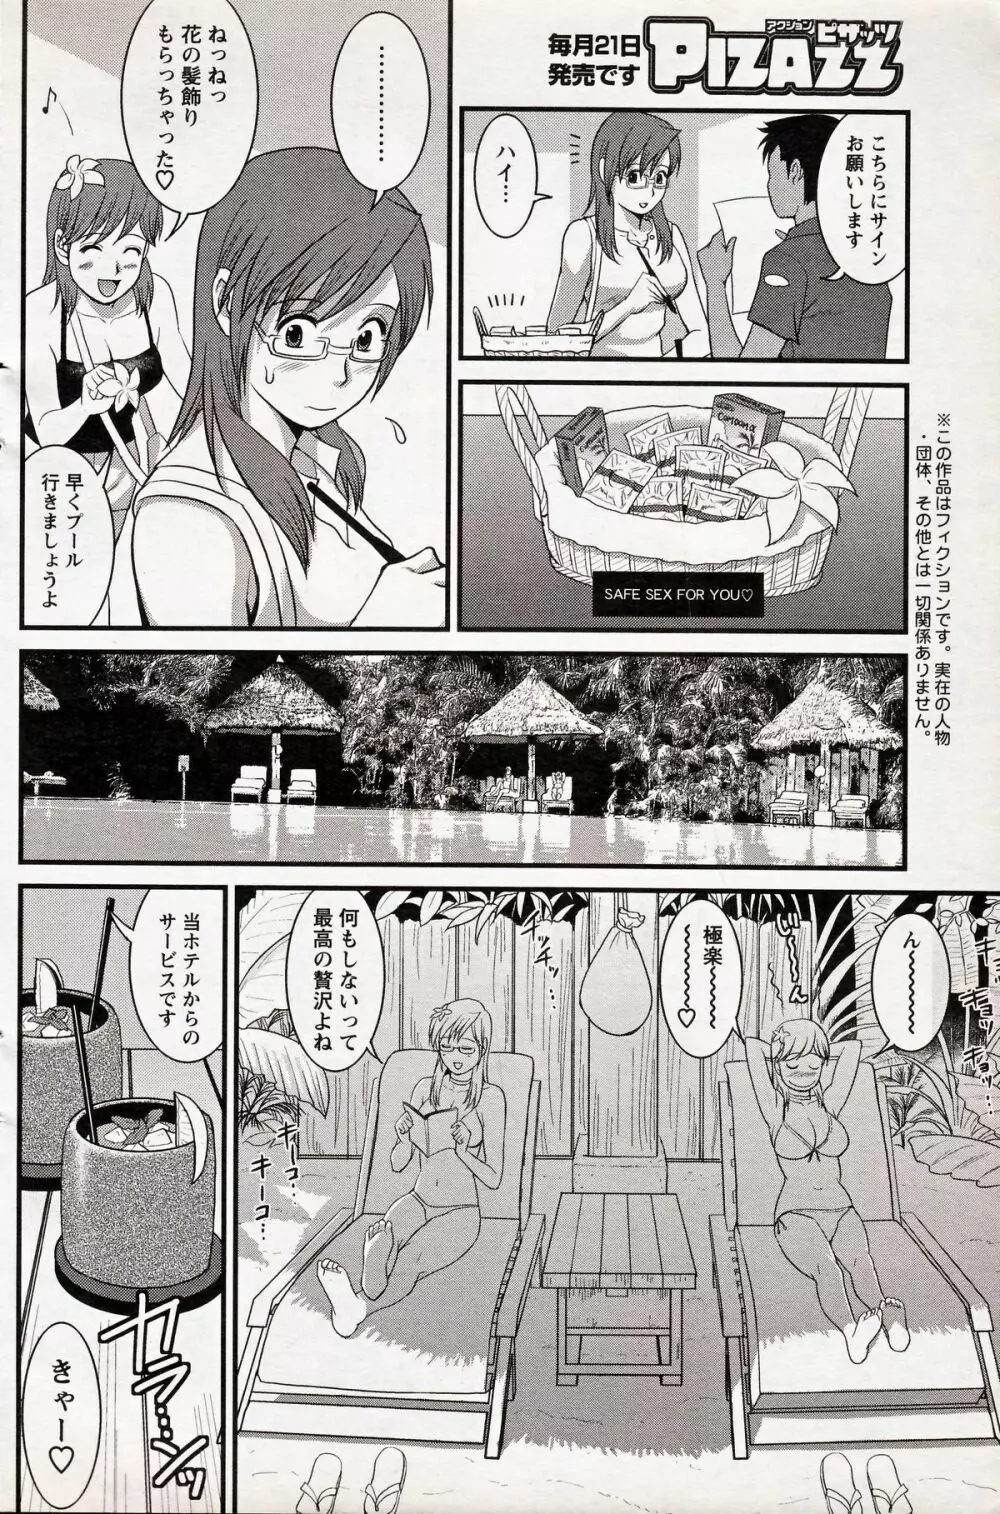 Haken no Muuko-san 16 8ページ